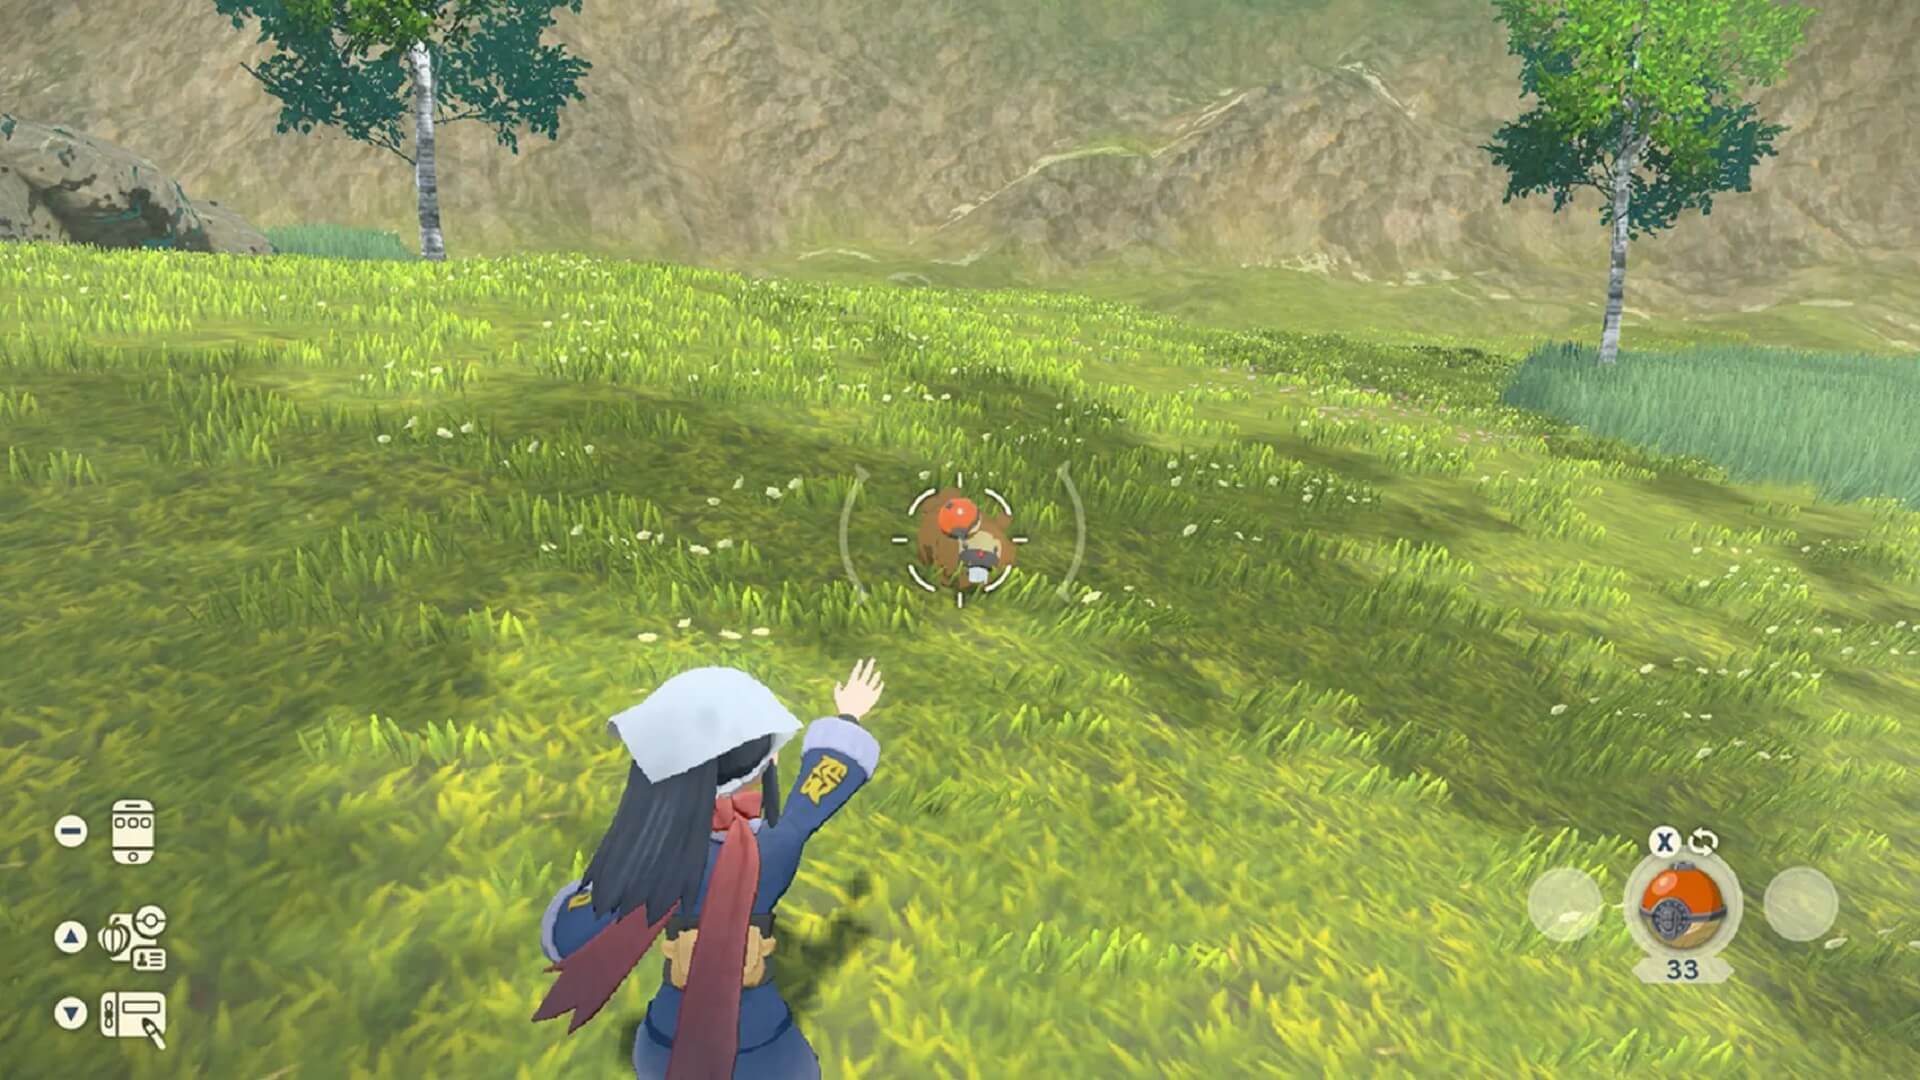 The player catching a Bidoof in Pokemon Legends: Arceus